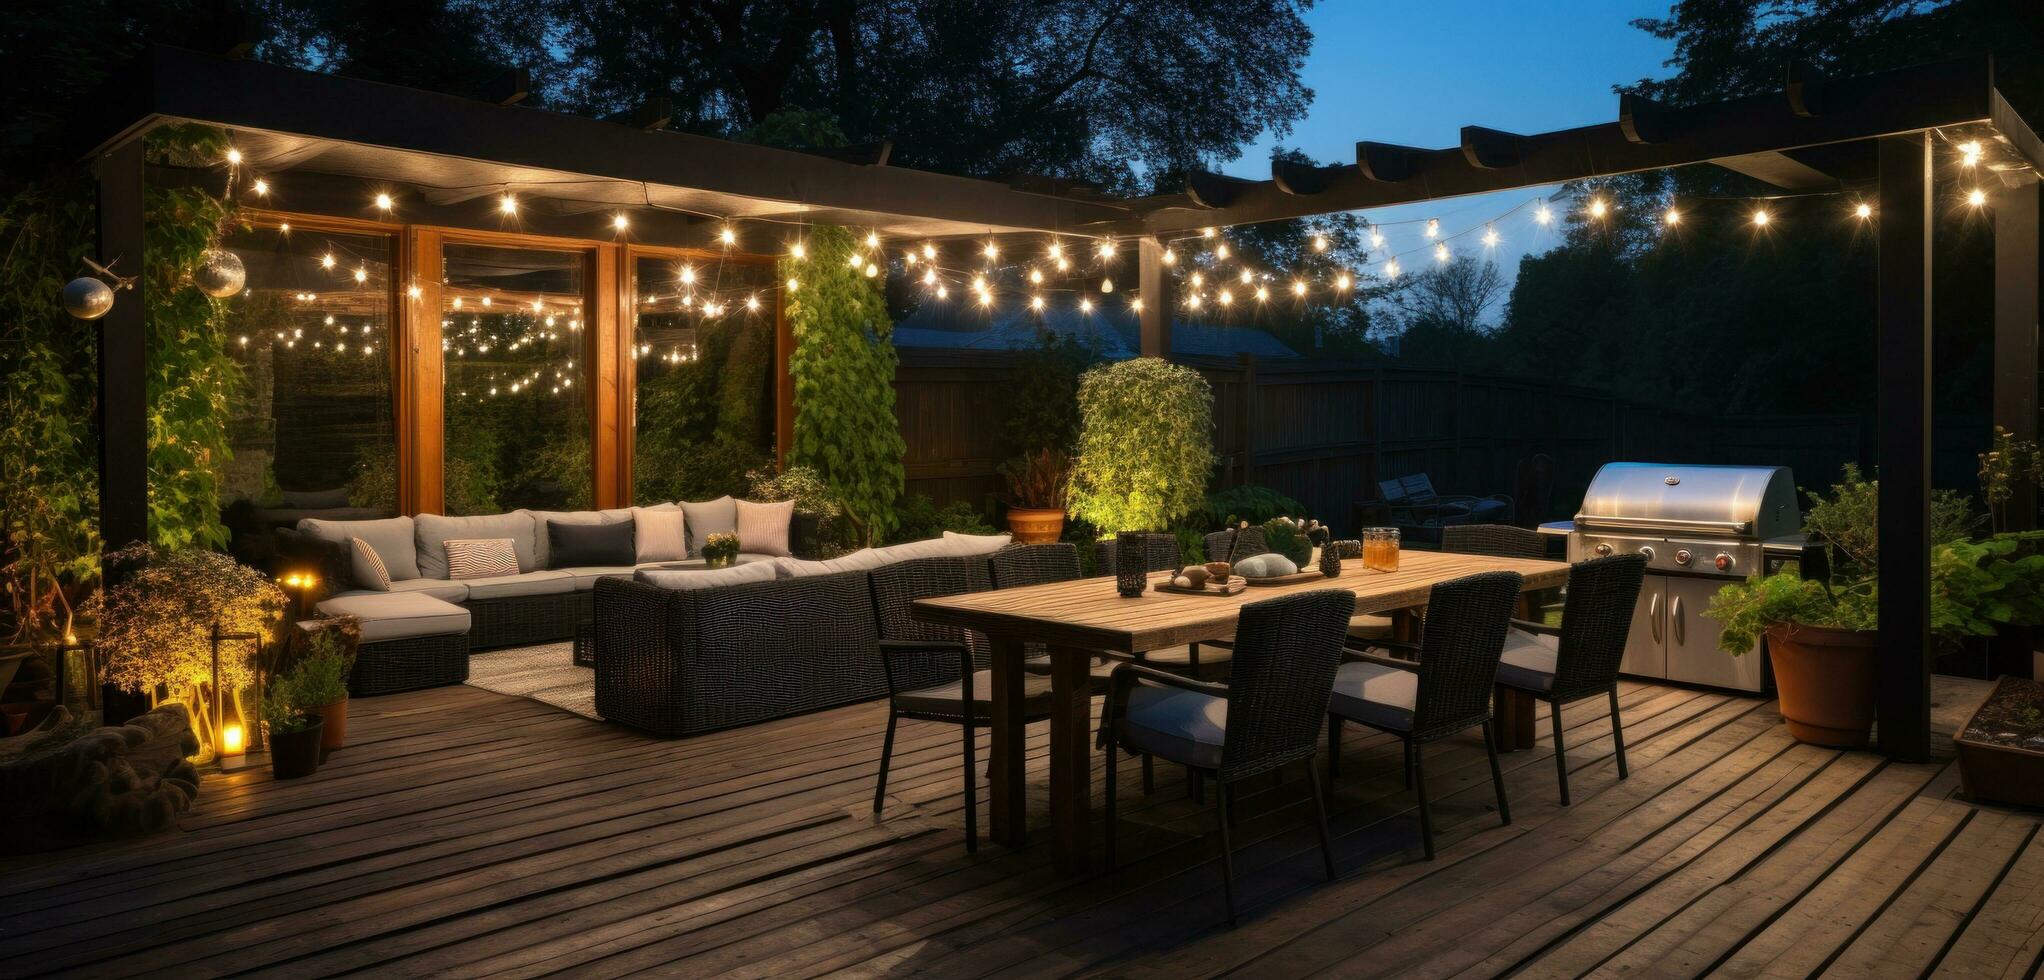 AI generated outdoor patio lighting ideas slide image photo